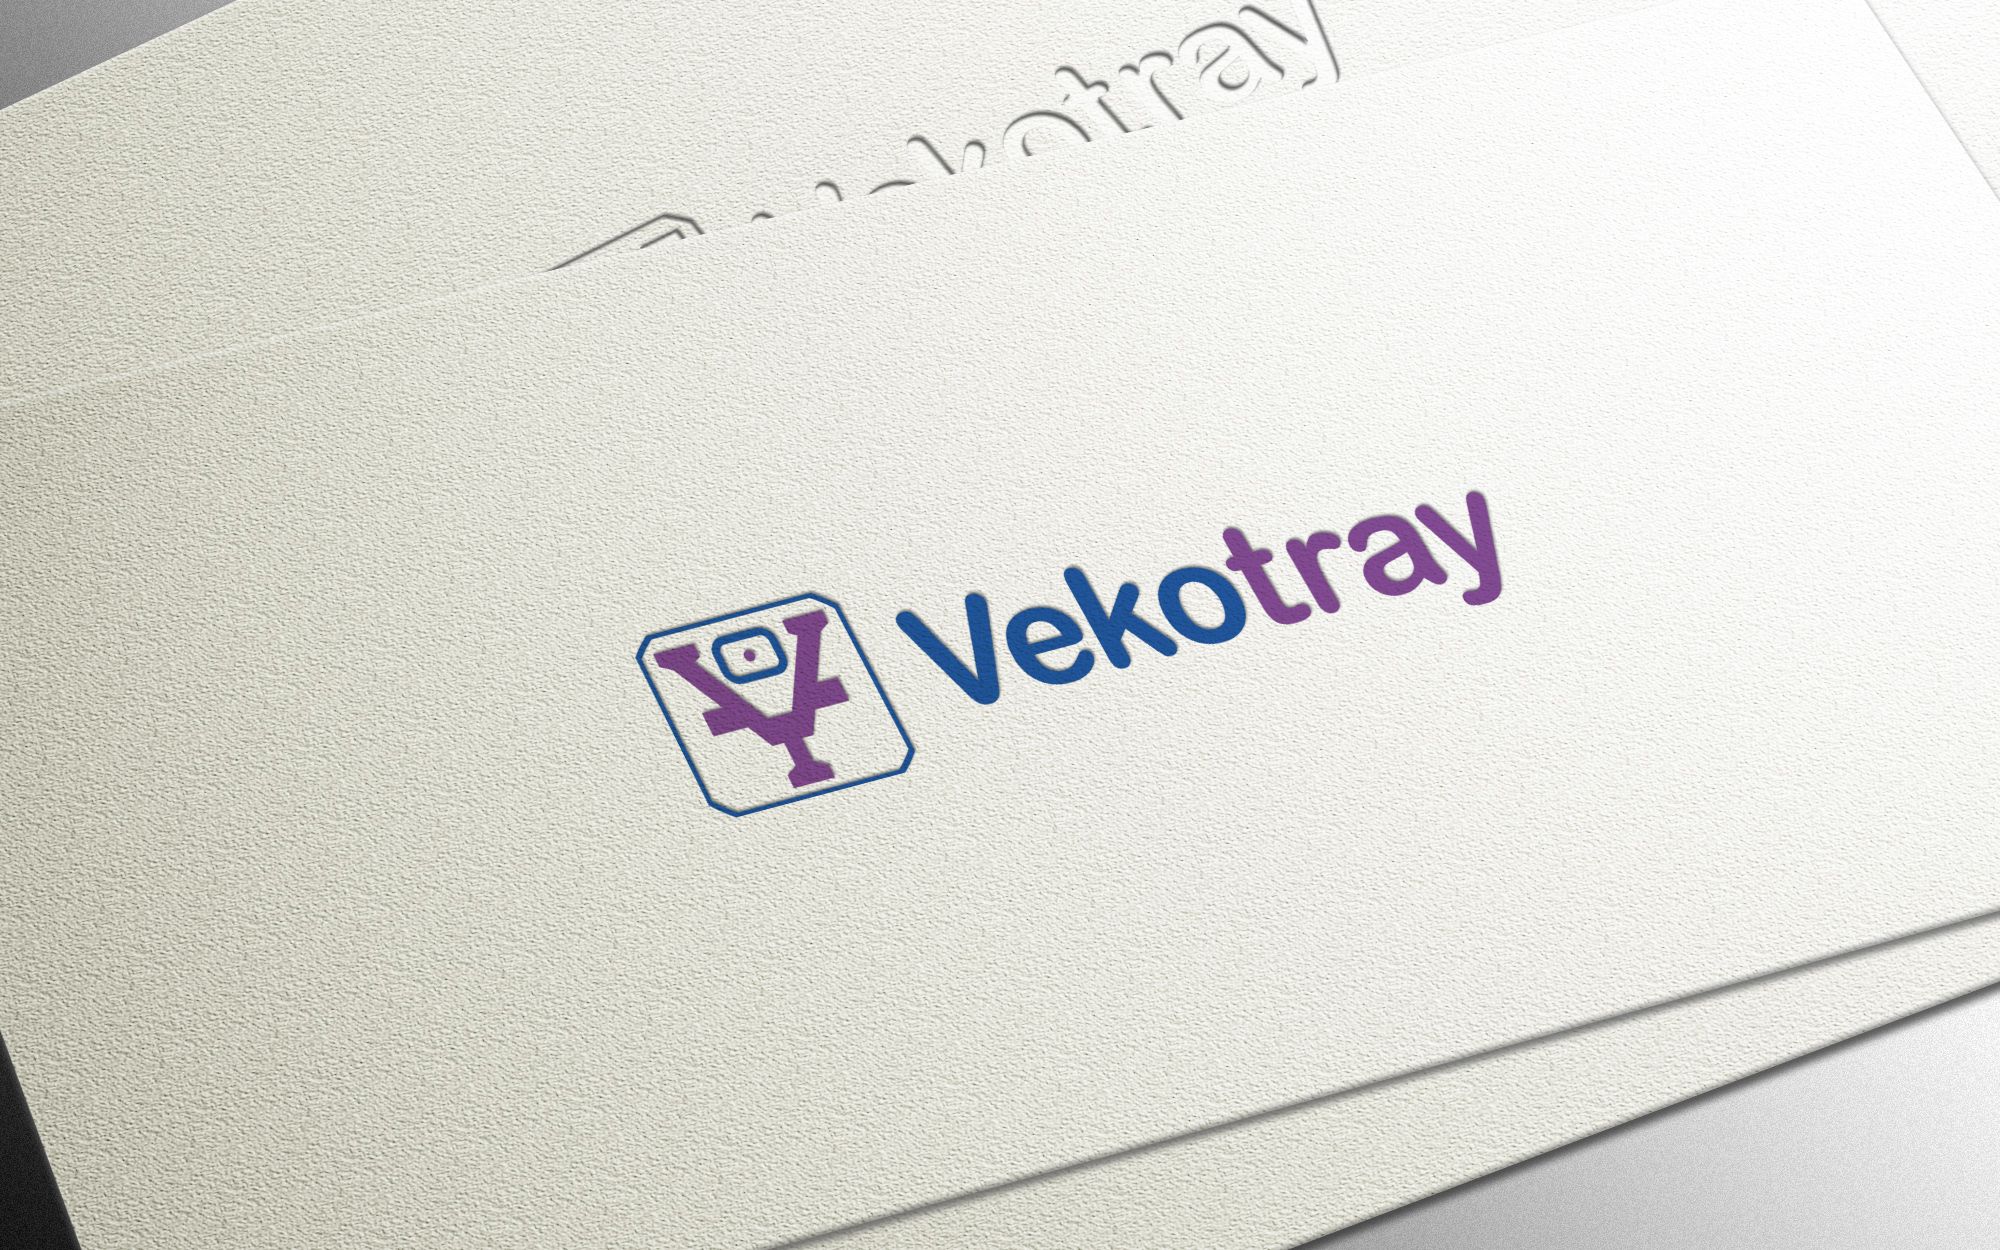 Разработка логотипа компании Vekotray - дизайнер Gas-Min